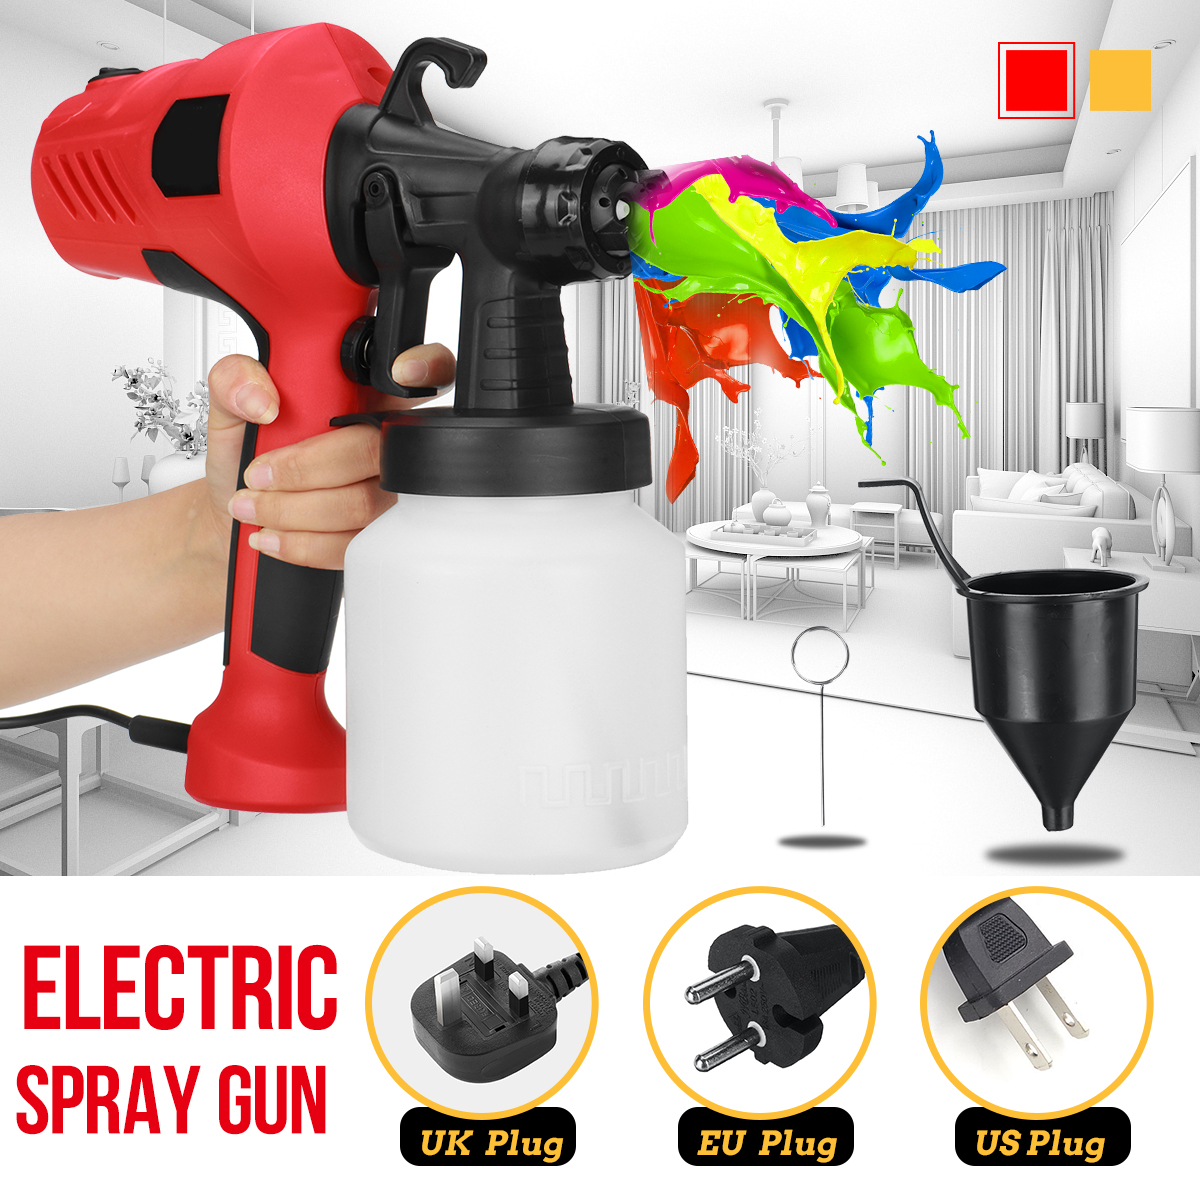 800ml-Electric-Paint-Spray-Guns-Disinfectant-Sprayer-Household-Portable-Disinfecting-Spray-DIY-Paint-1866548-1